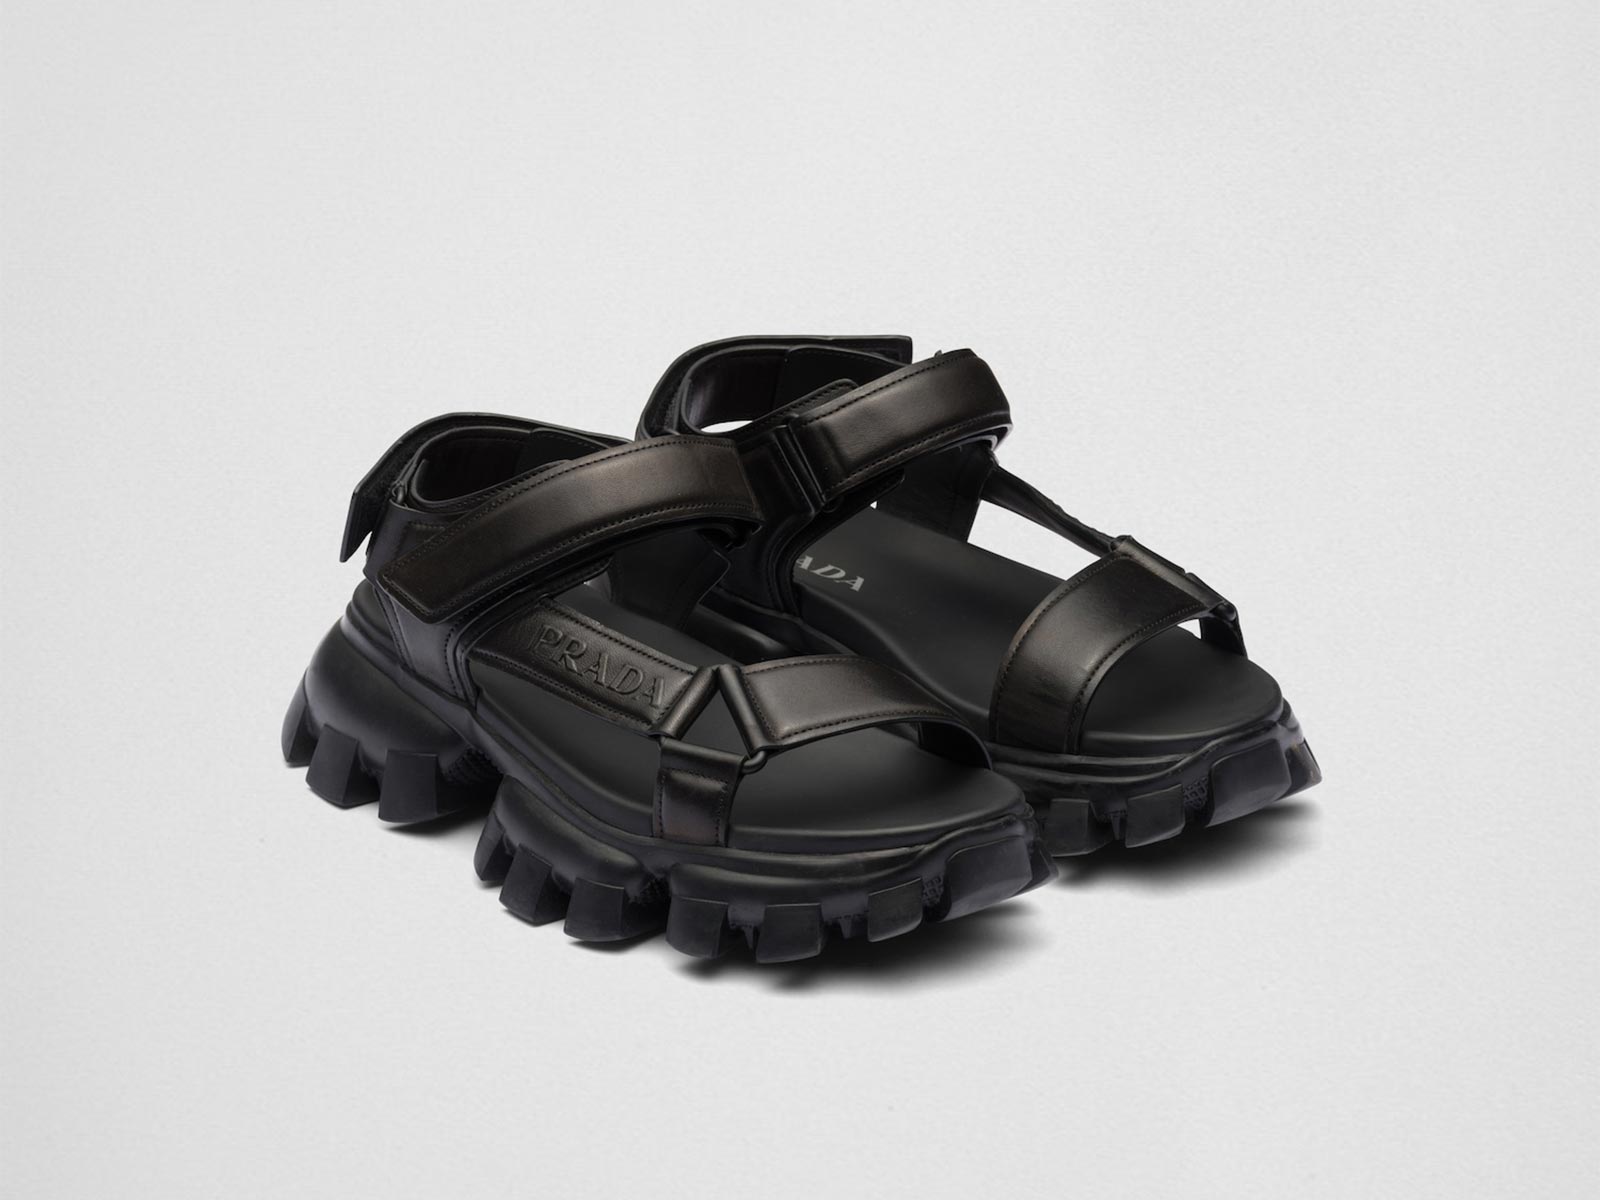 Raf Simons designs three sandals for Prada